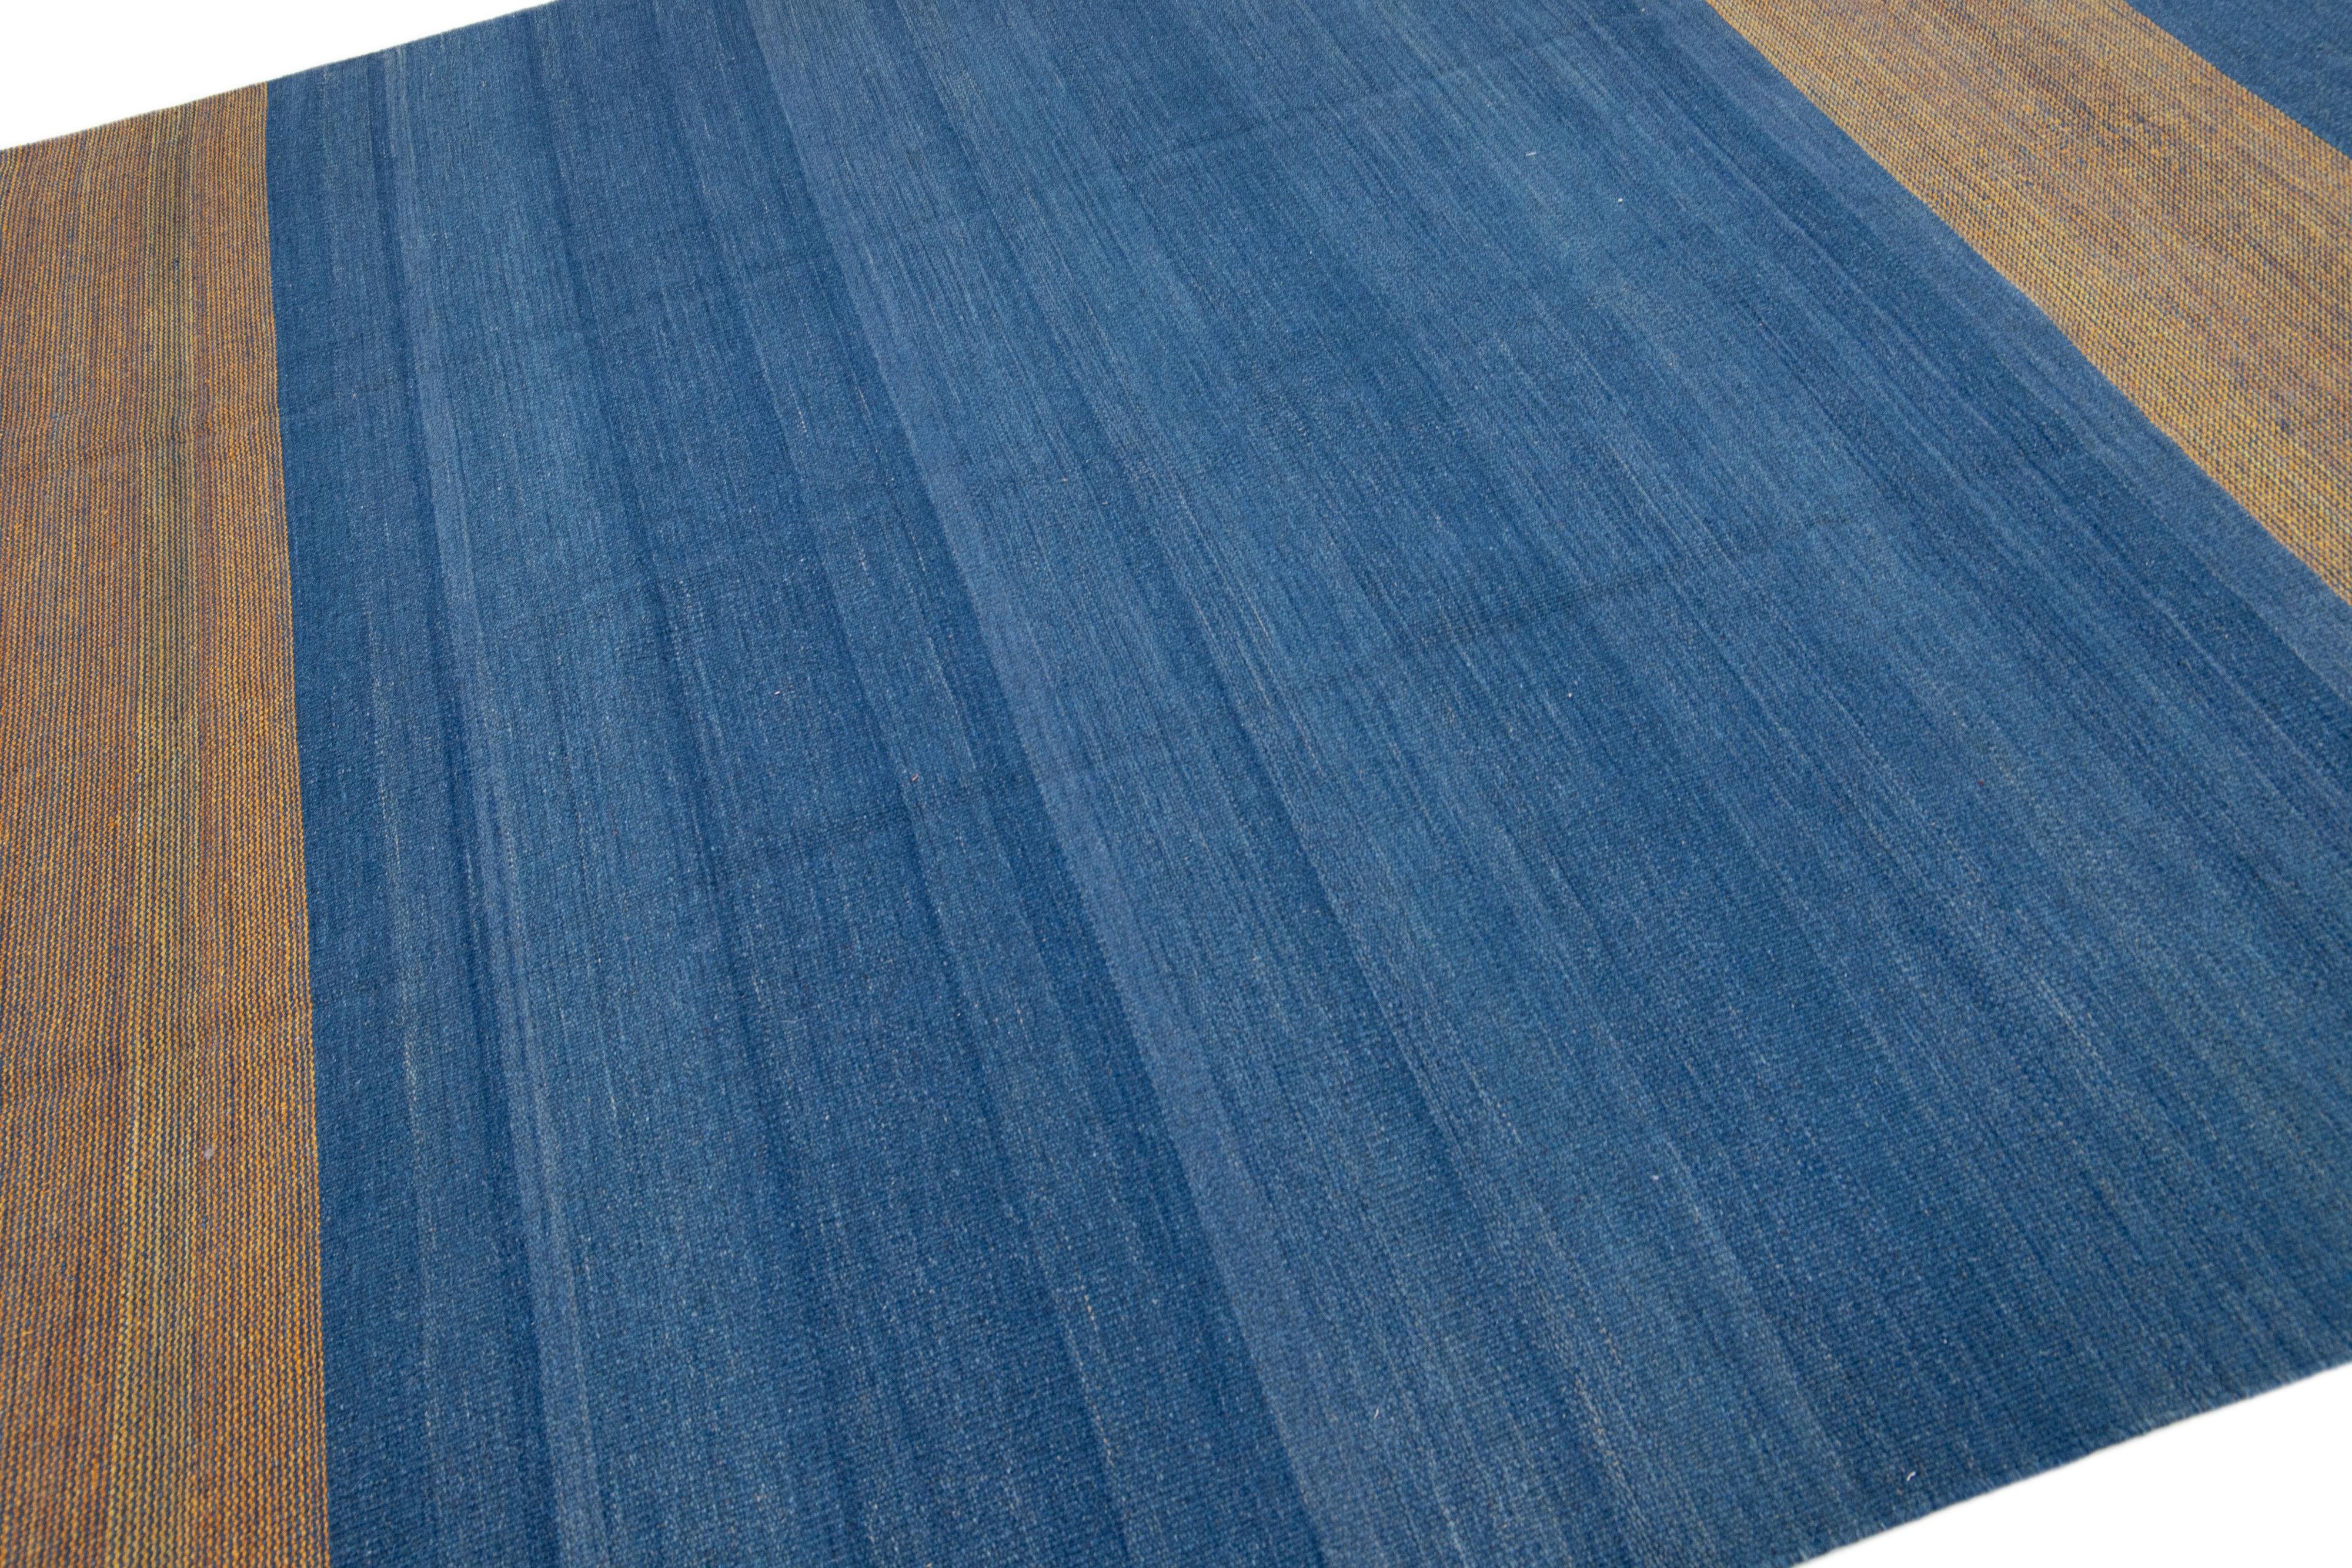 Hand-Knotted Blue Flatweave Modern Turkish Kilim Wool Rug with Minimalist Design For Sale